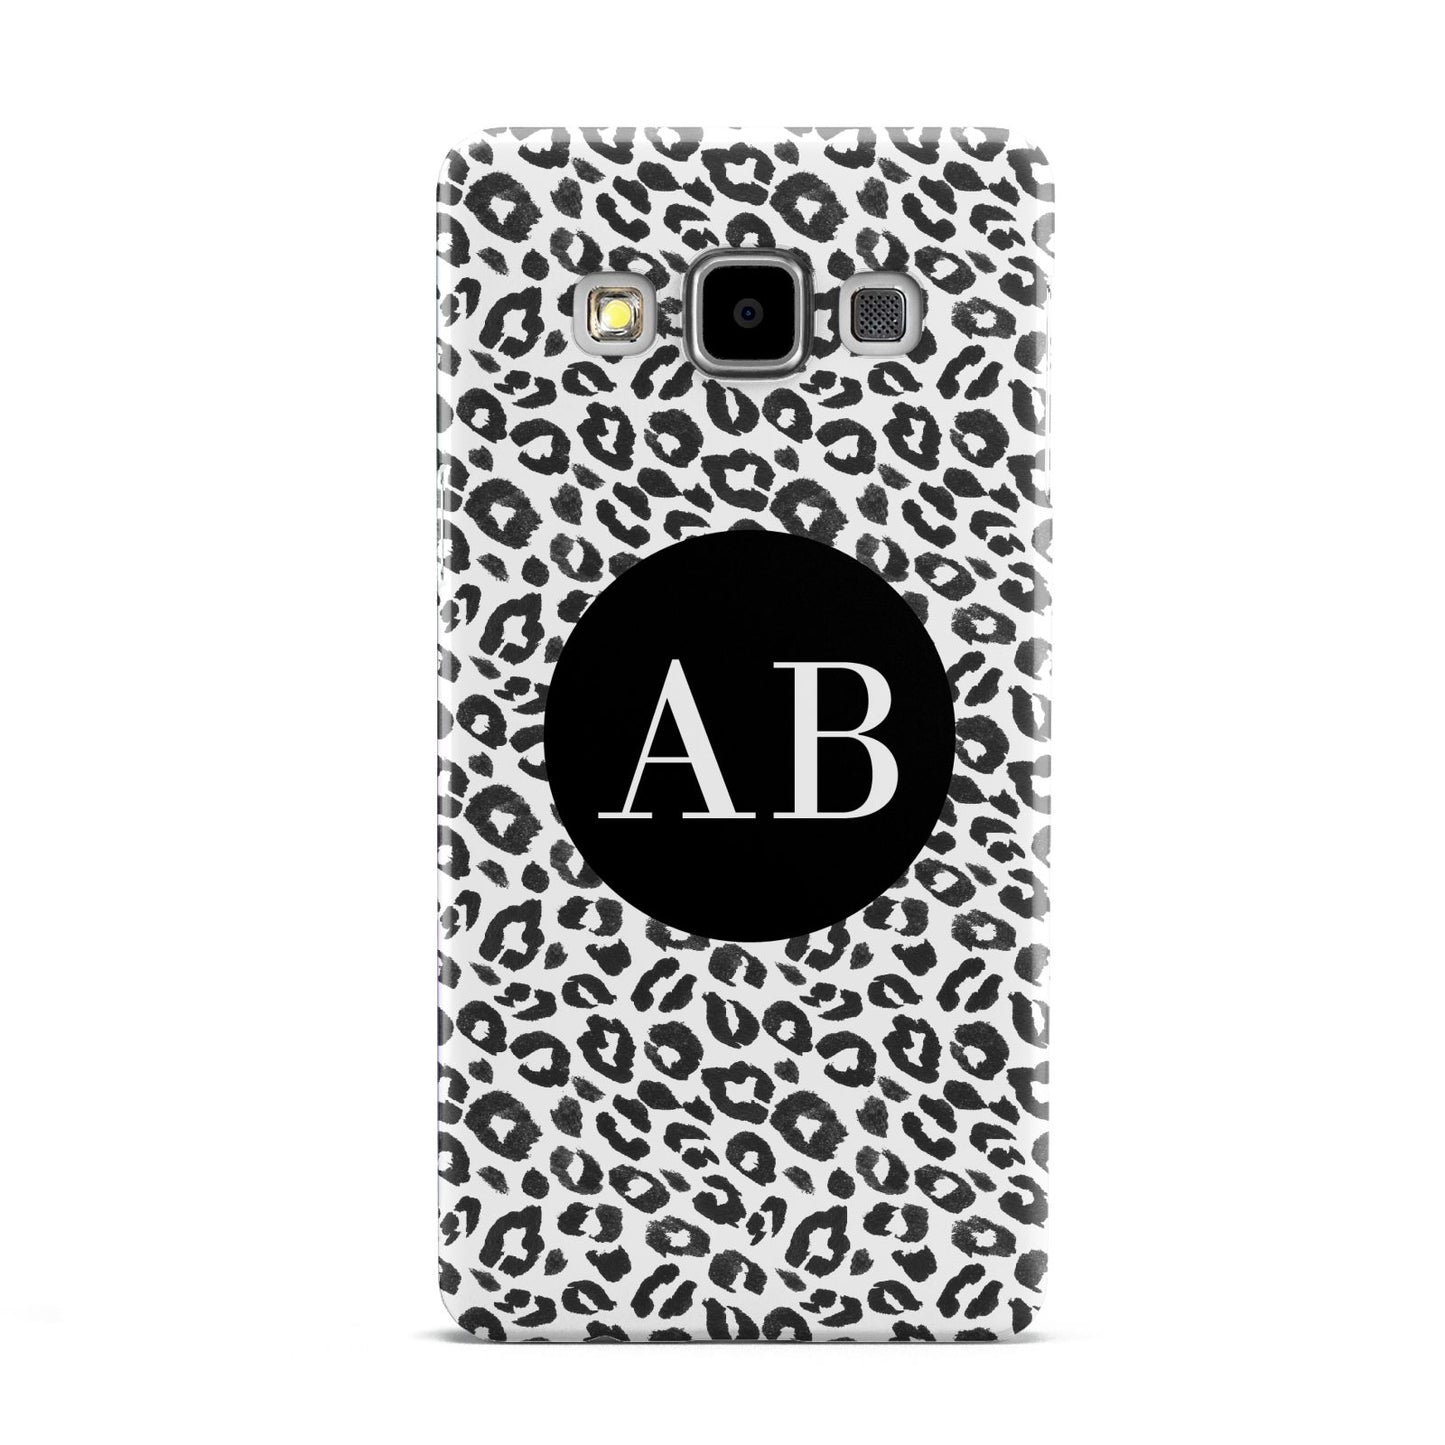 Leopard Print Black and White Samsung Galaxy A5 Case